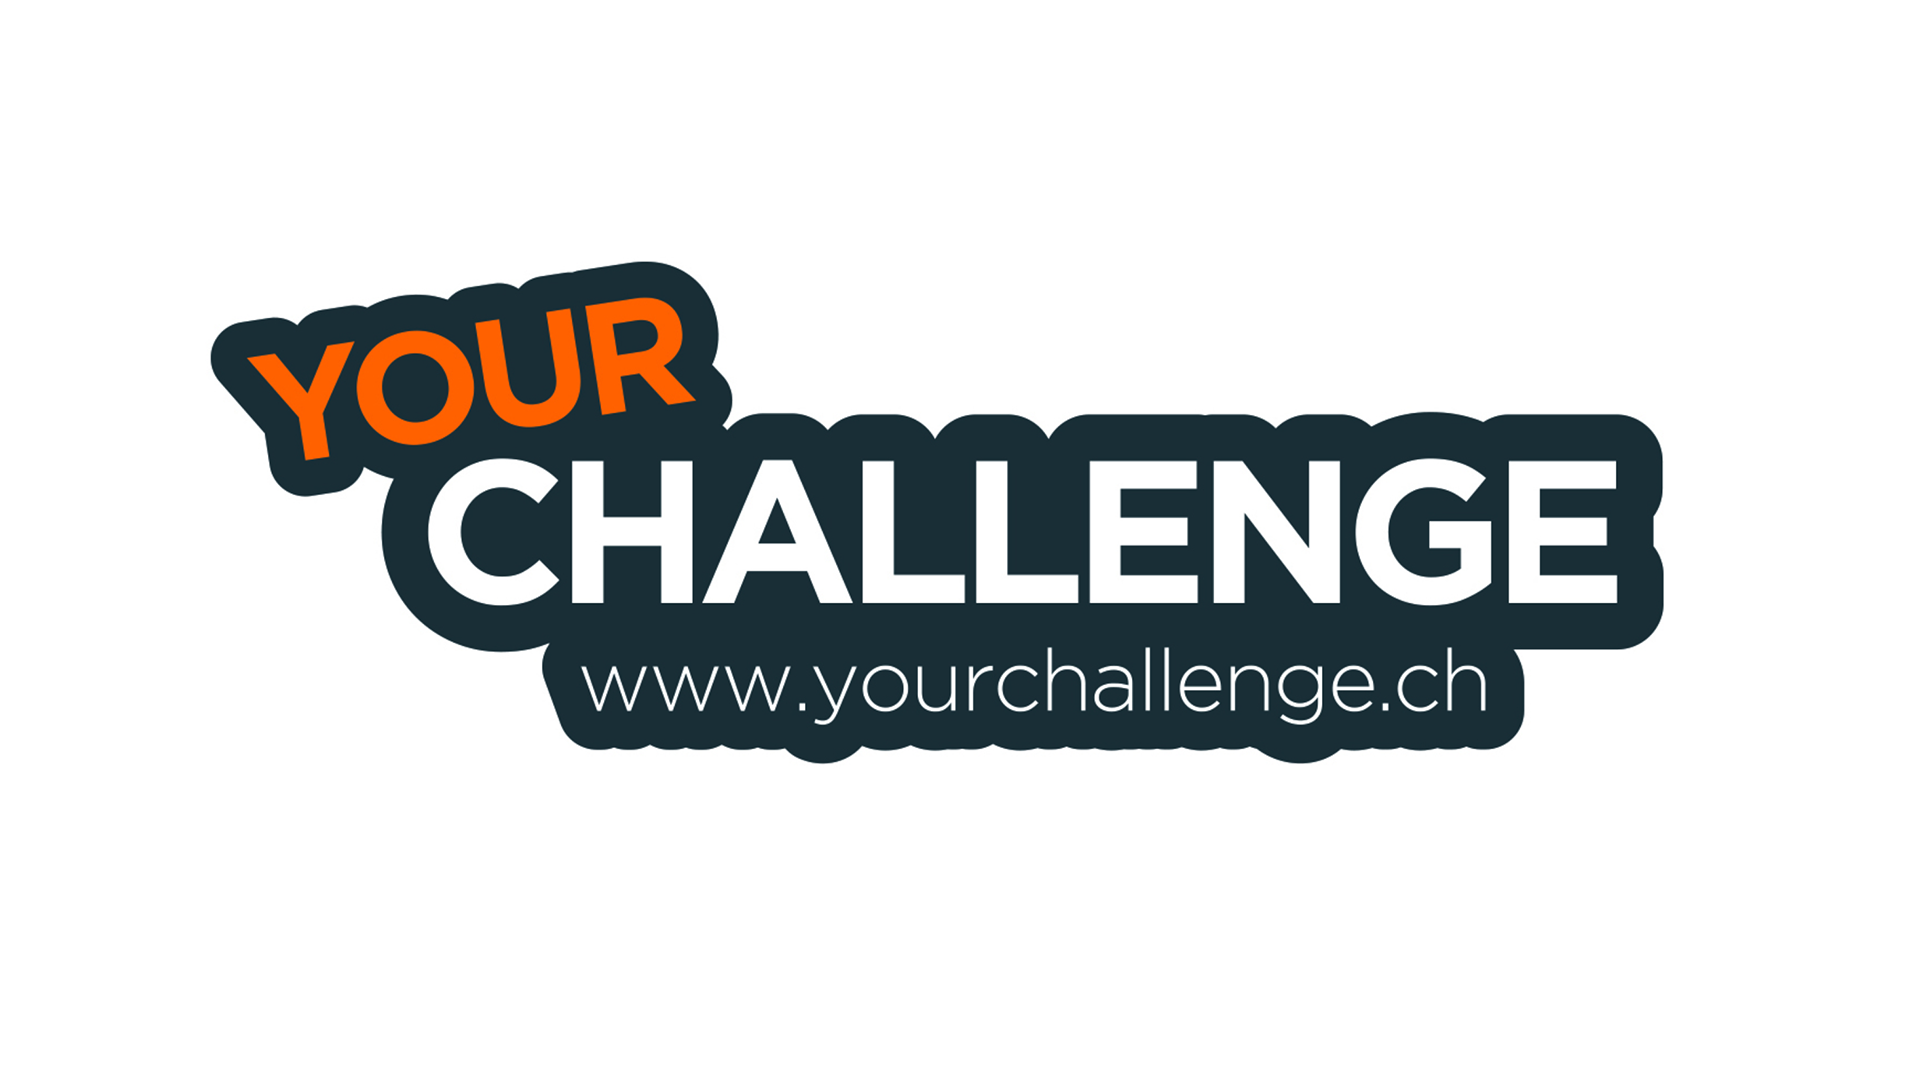 Your Challenge